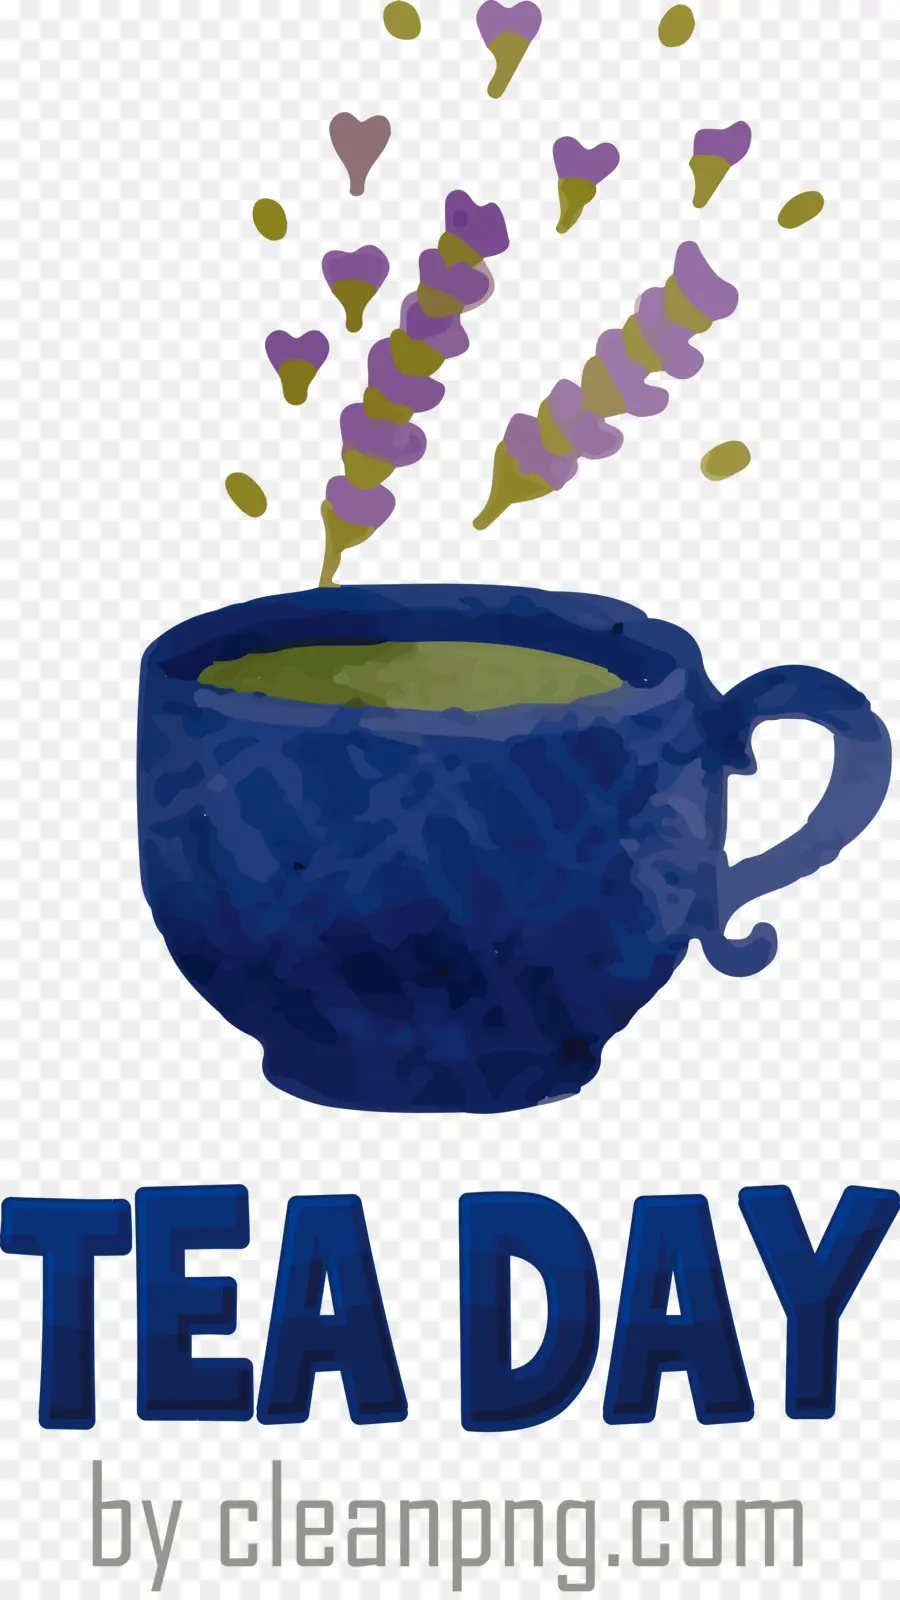 Tea Day Internationaler Teetag - 